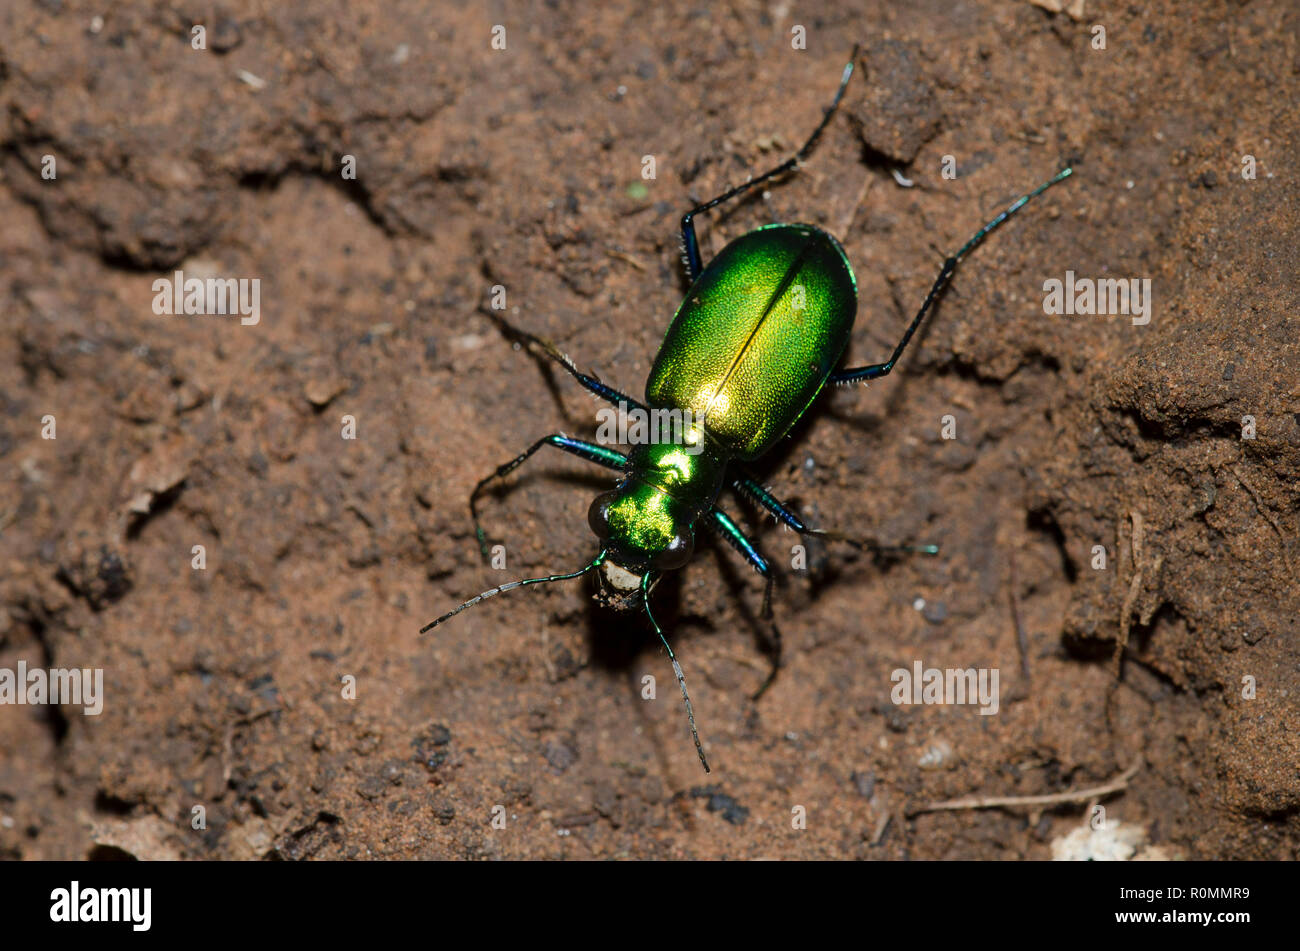 Six-spotted Tiger Beetle, Cicindela sexguttata Stock Photo